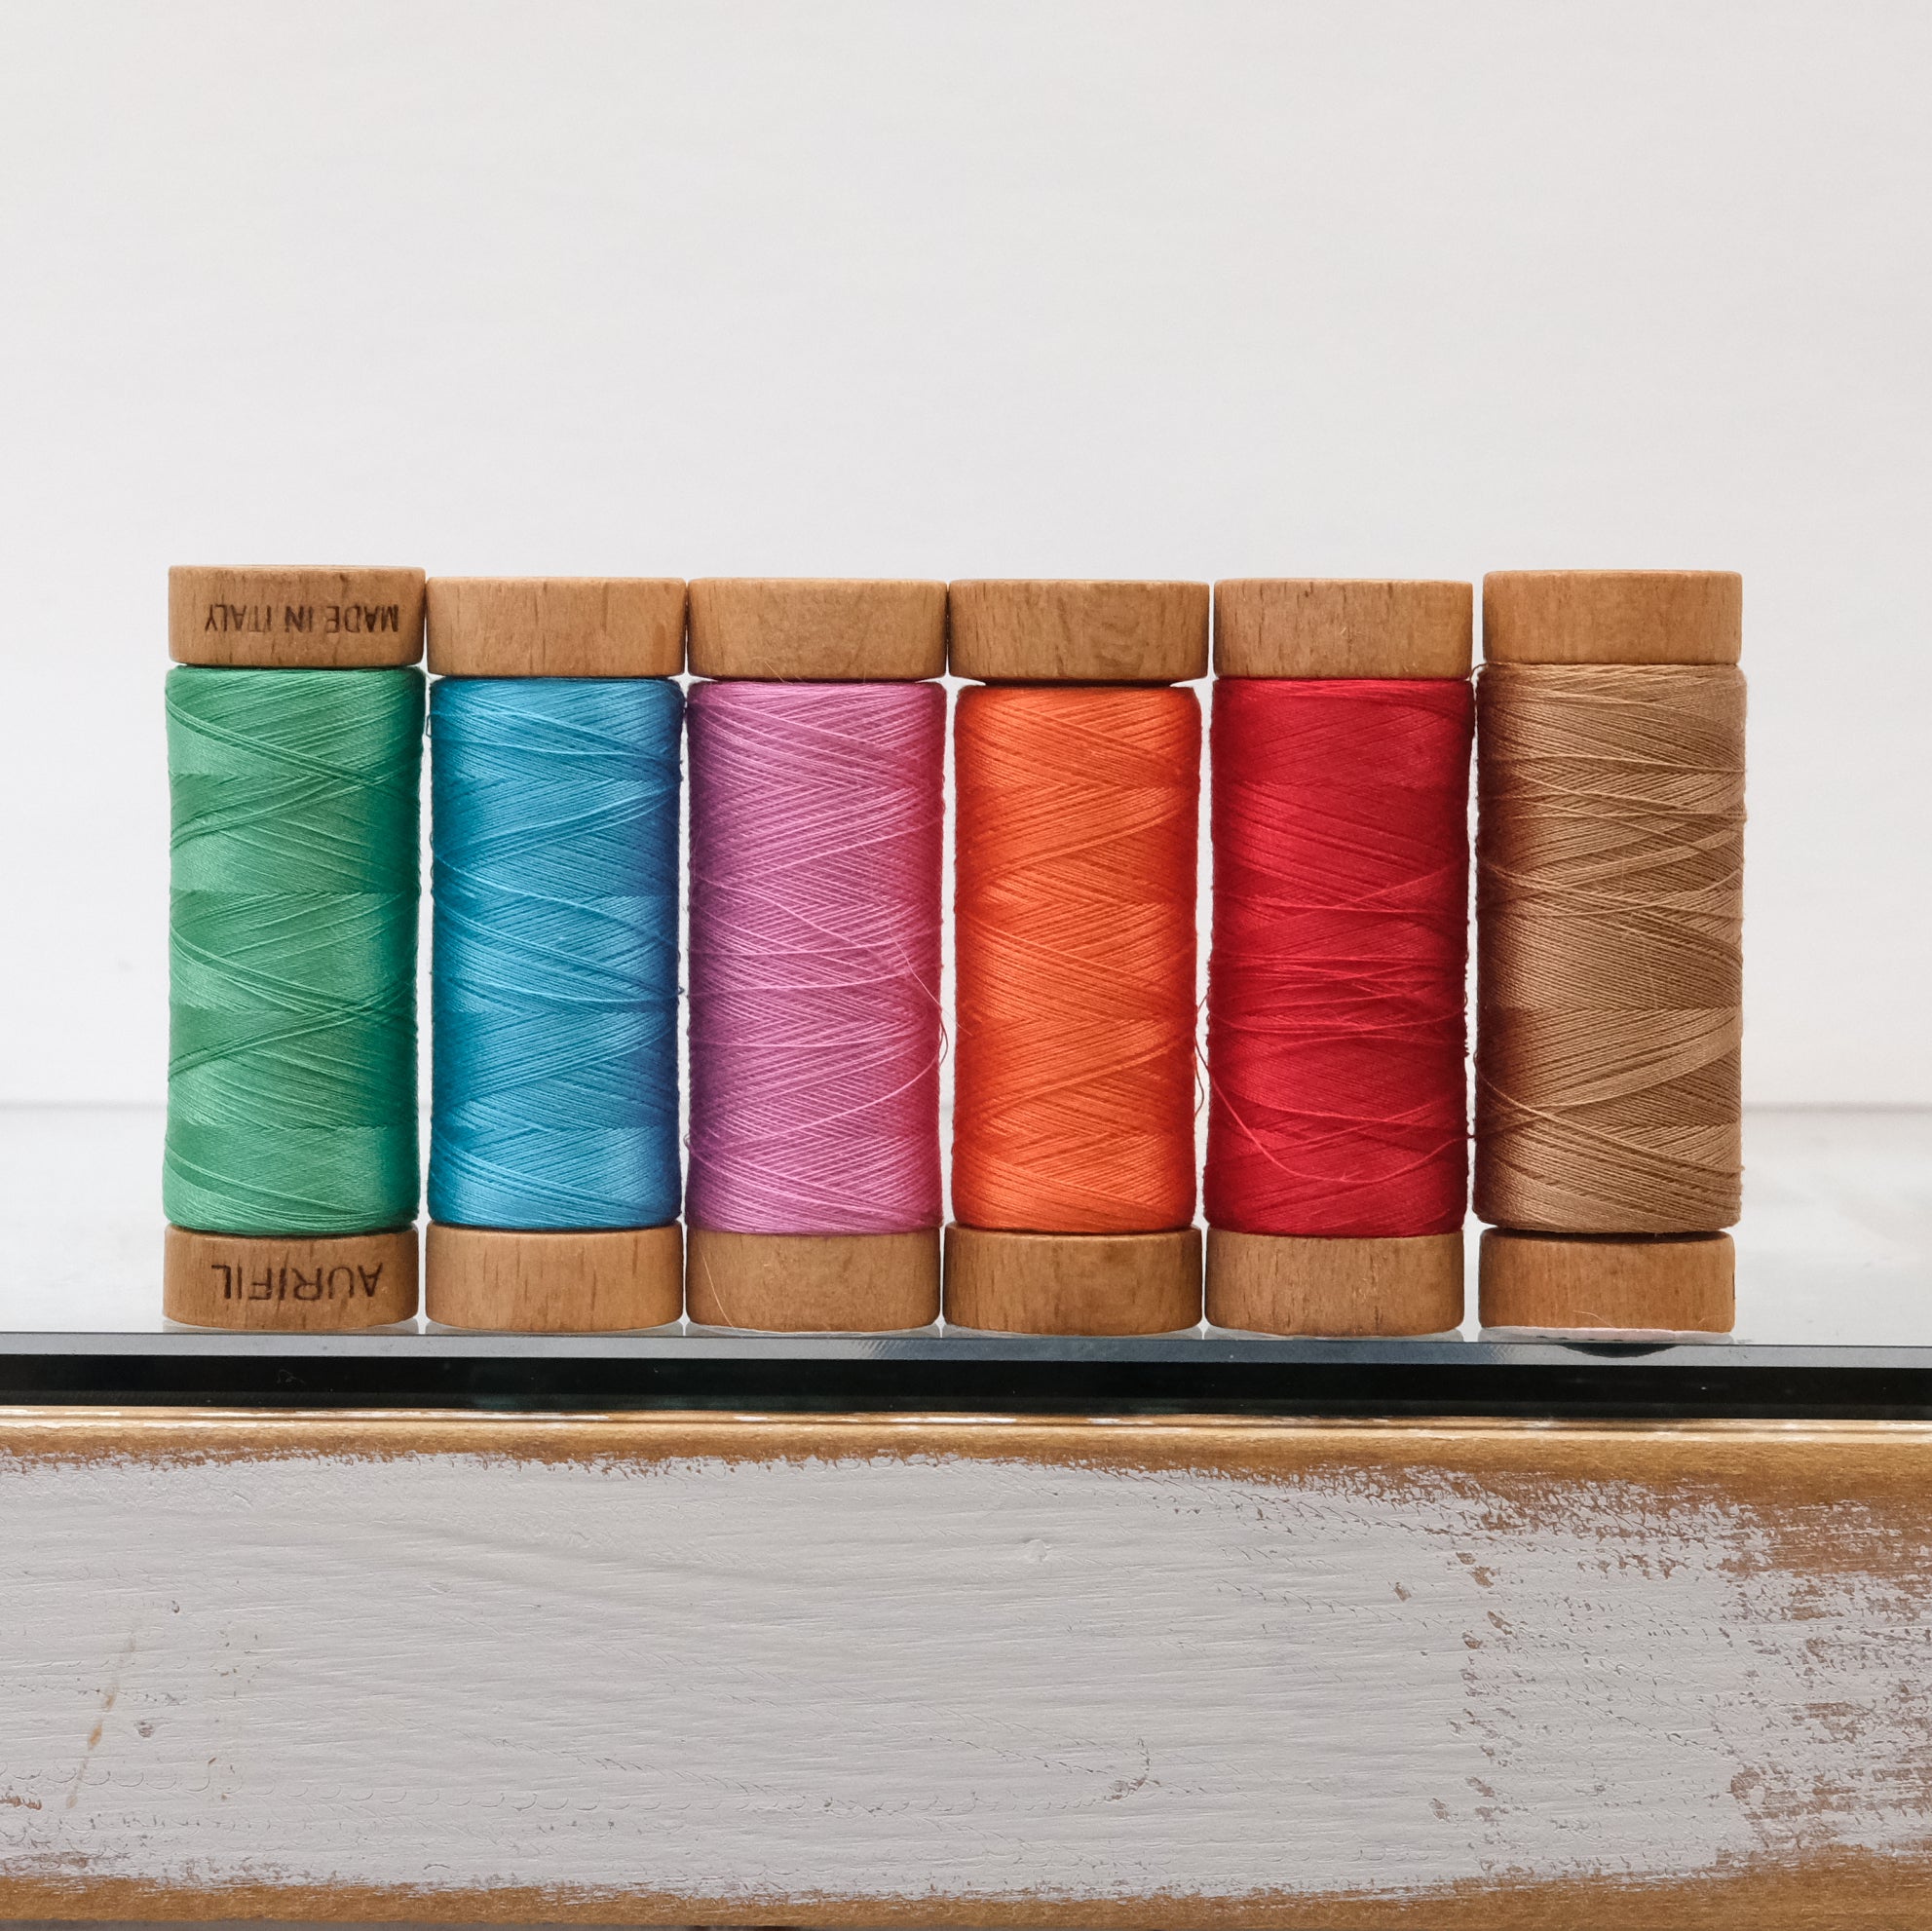 Aurifil 80wt Cotton Thread - Individual Cool Color Options